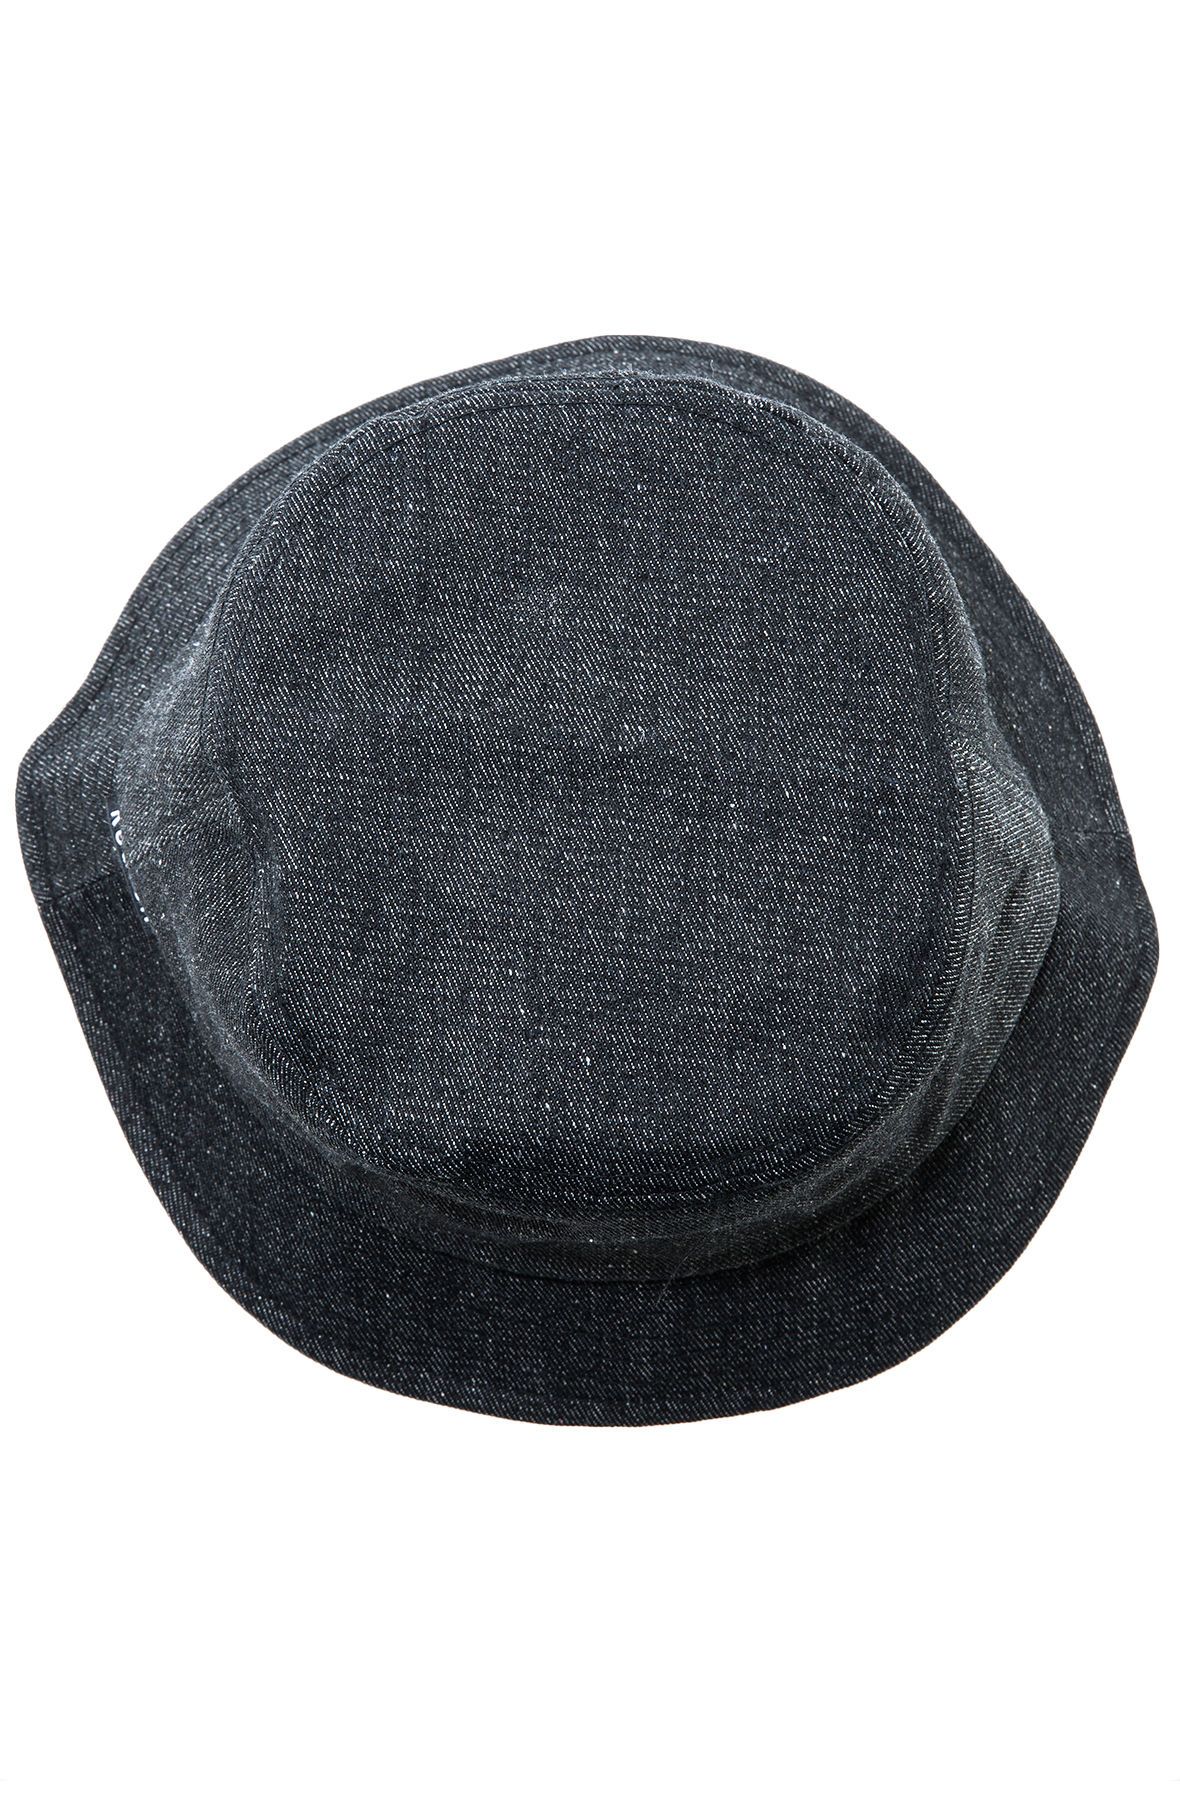 The Munchies Bucket Hat in Black